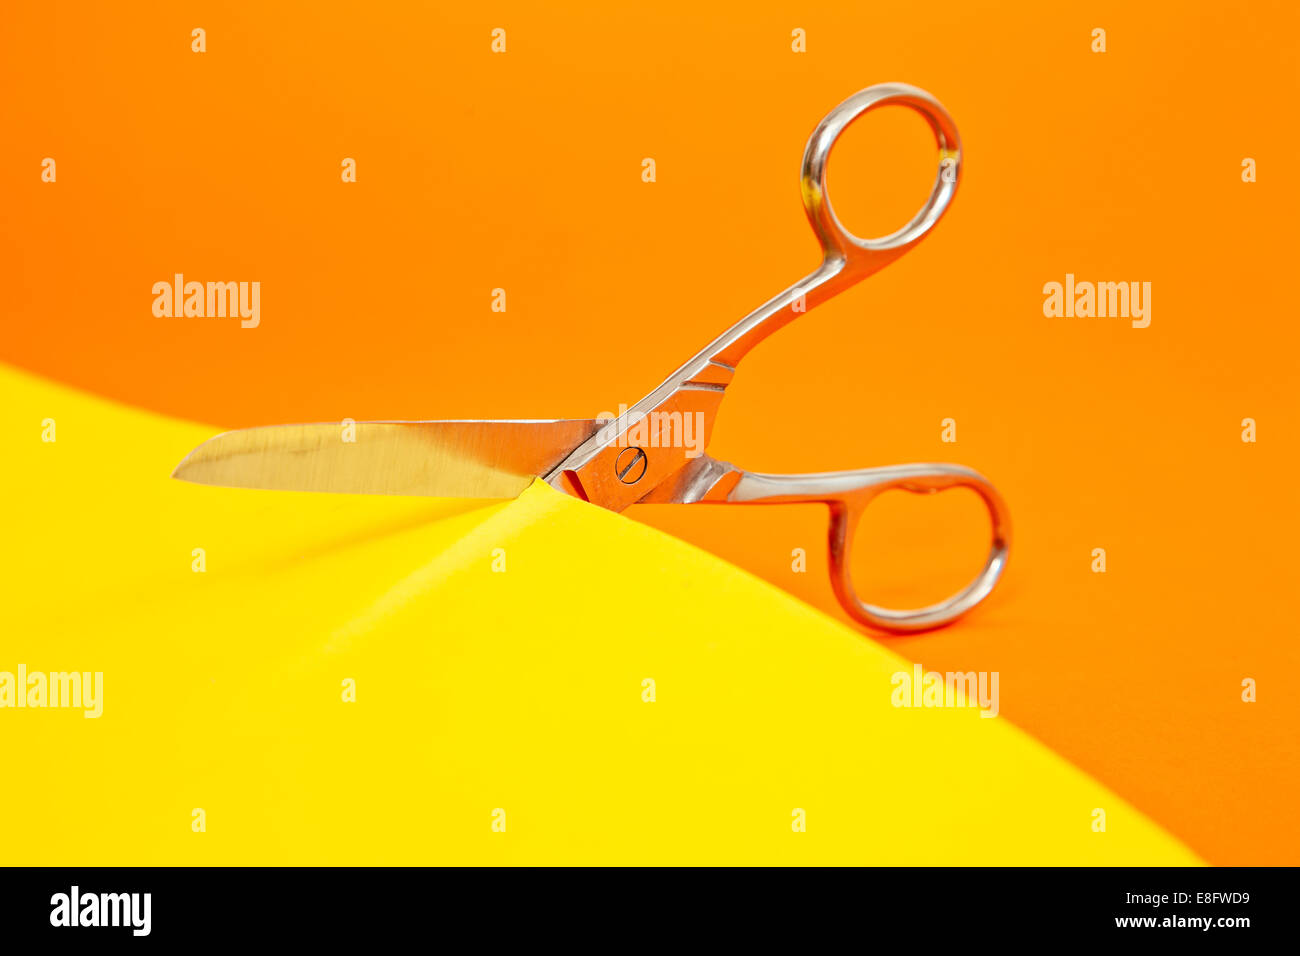 Scissors Cutting Yellow Paper Stock Photo